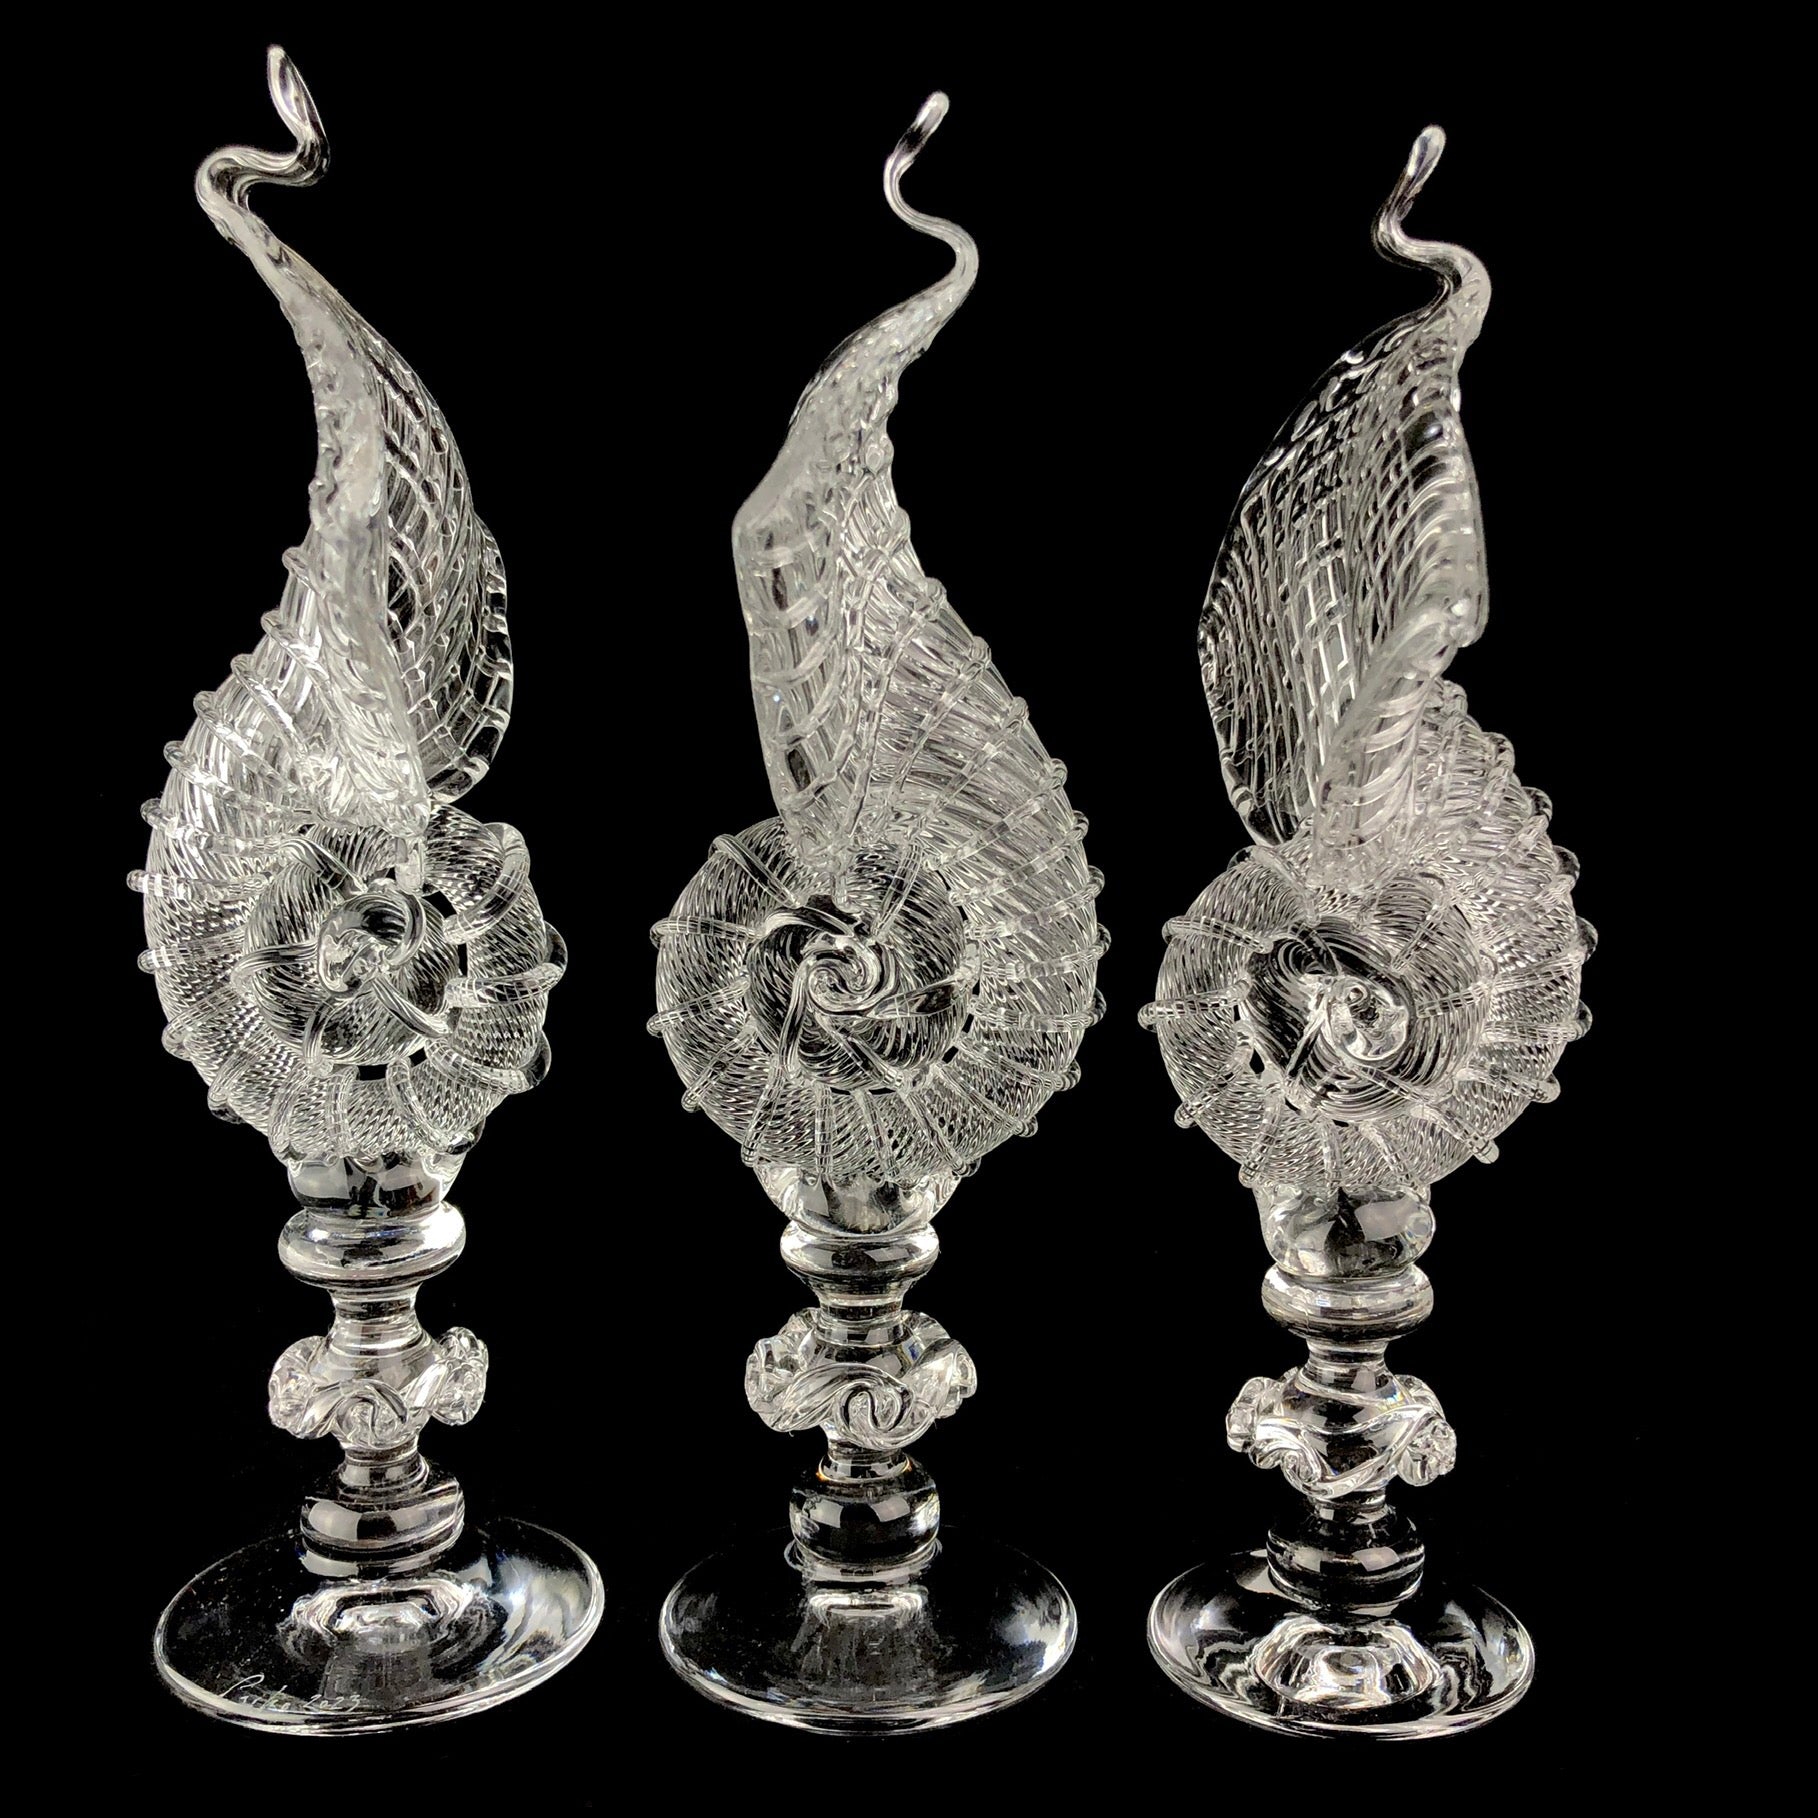 Three Glass Nautilus Shell Sculptures